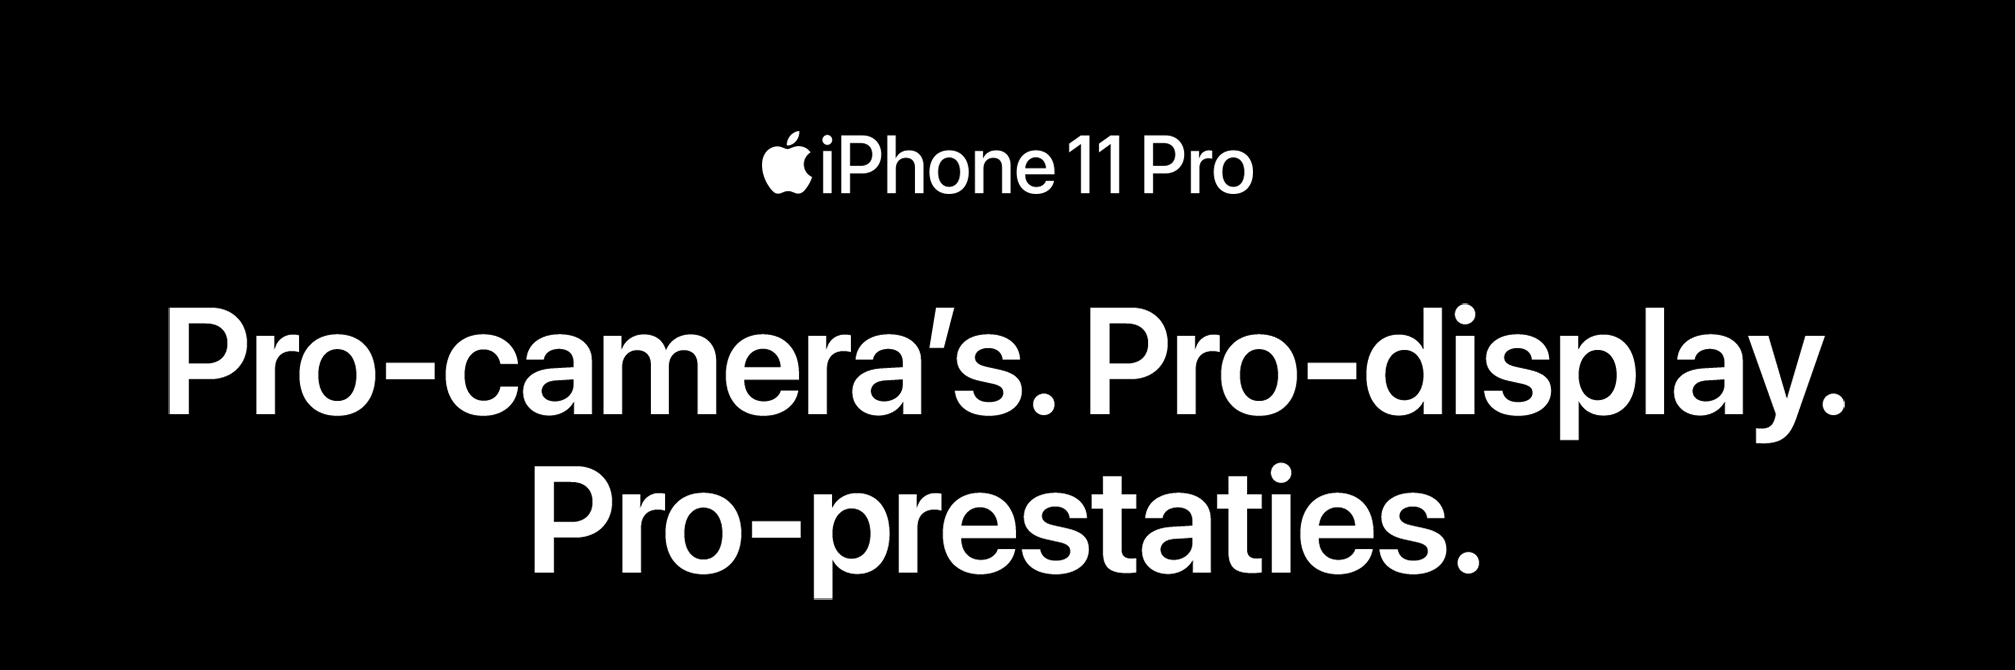 iPhone 11 Pro - Pro-camera's. Pro-display. Pro-prestaties.